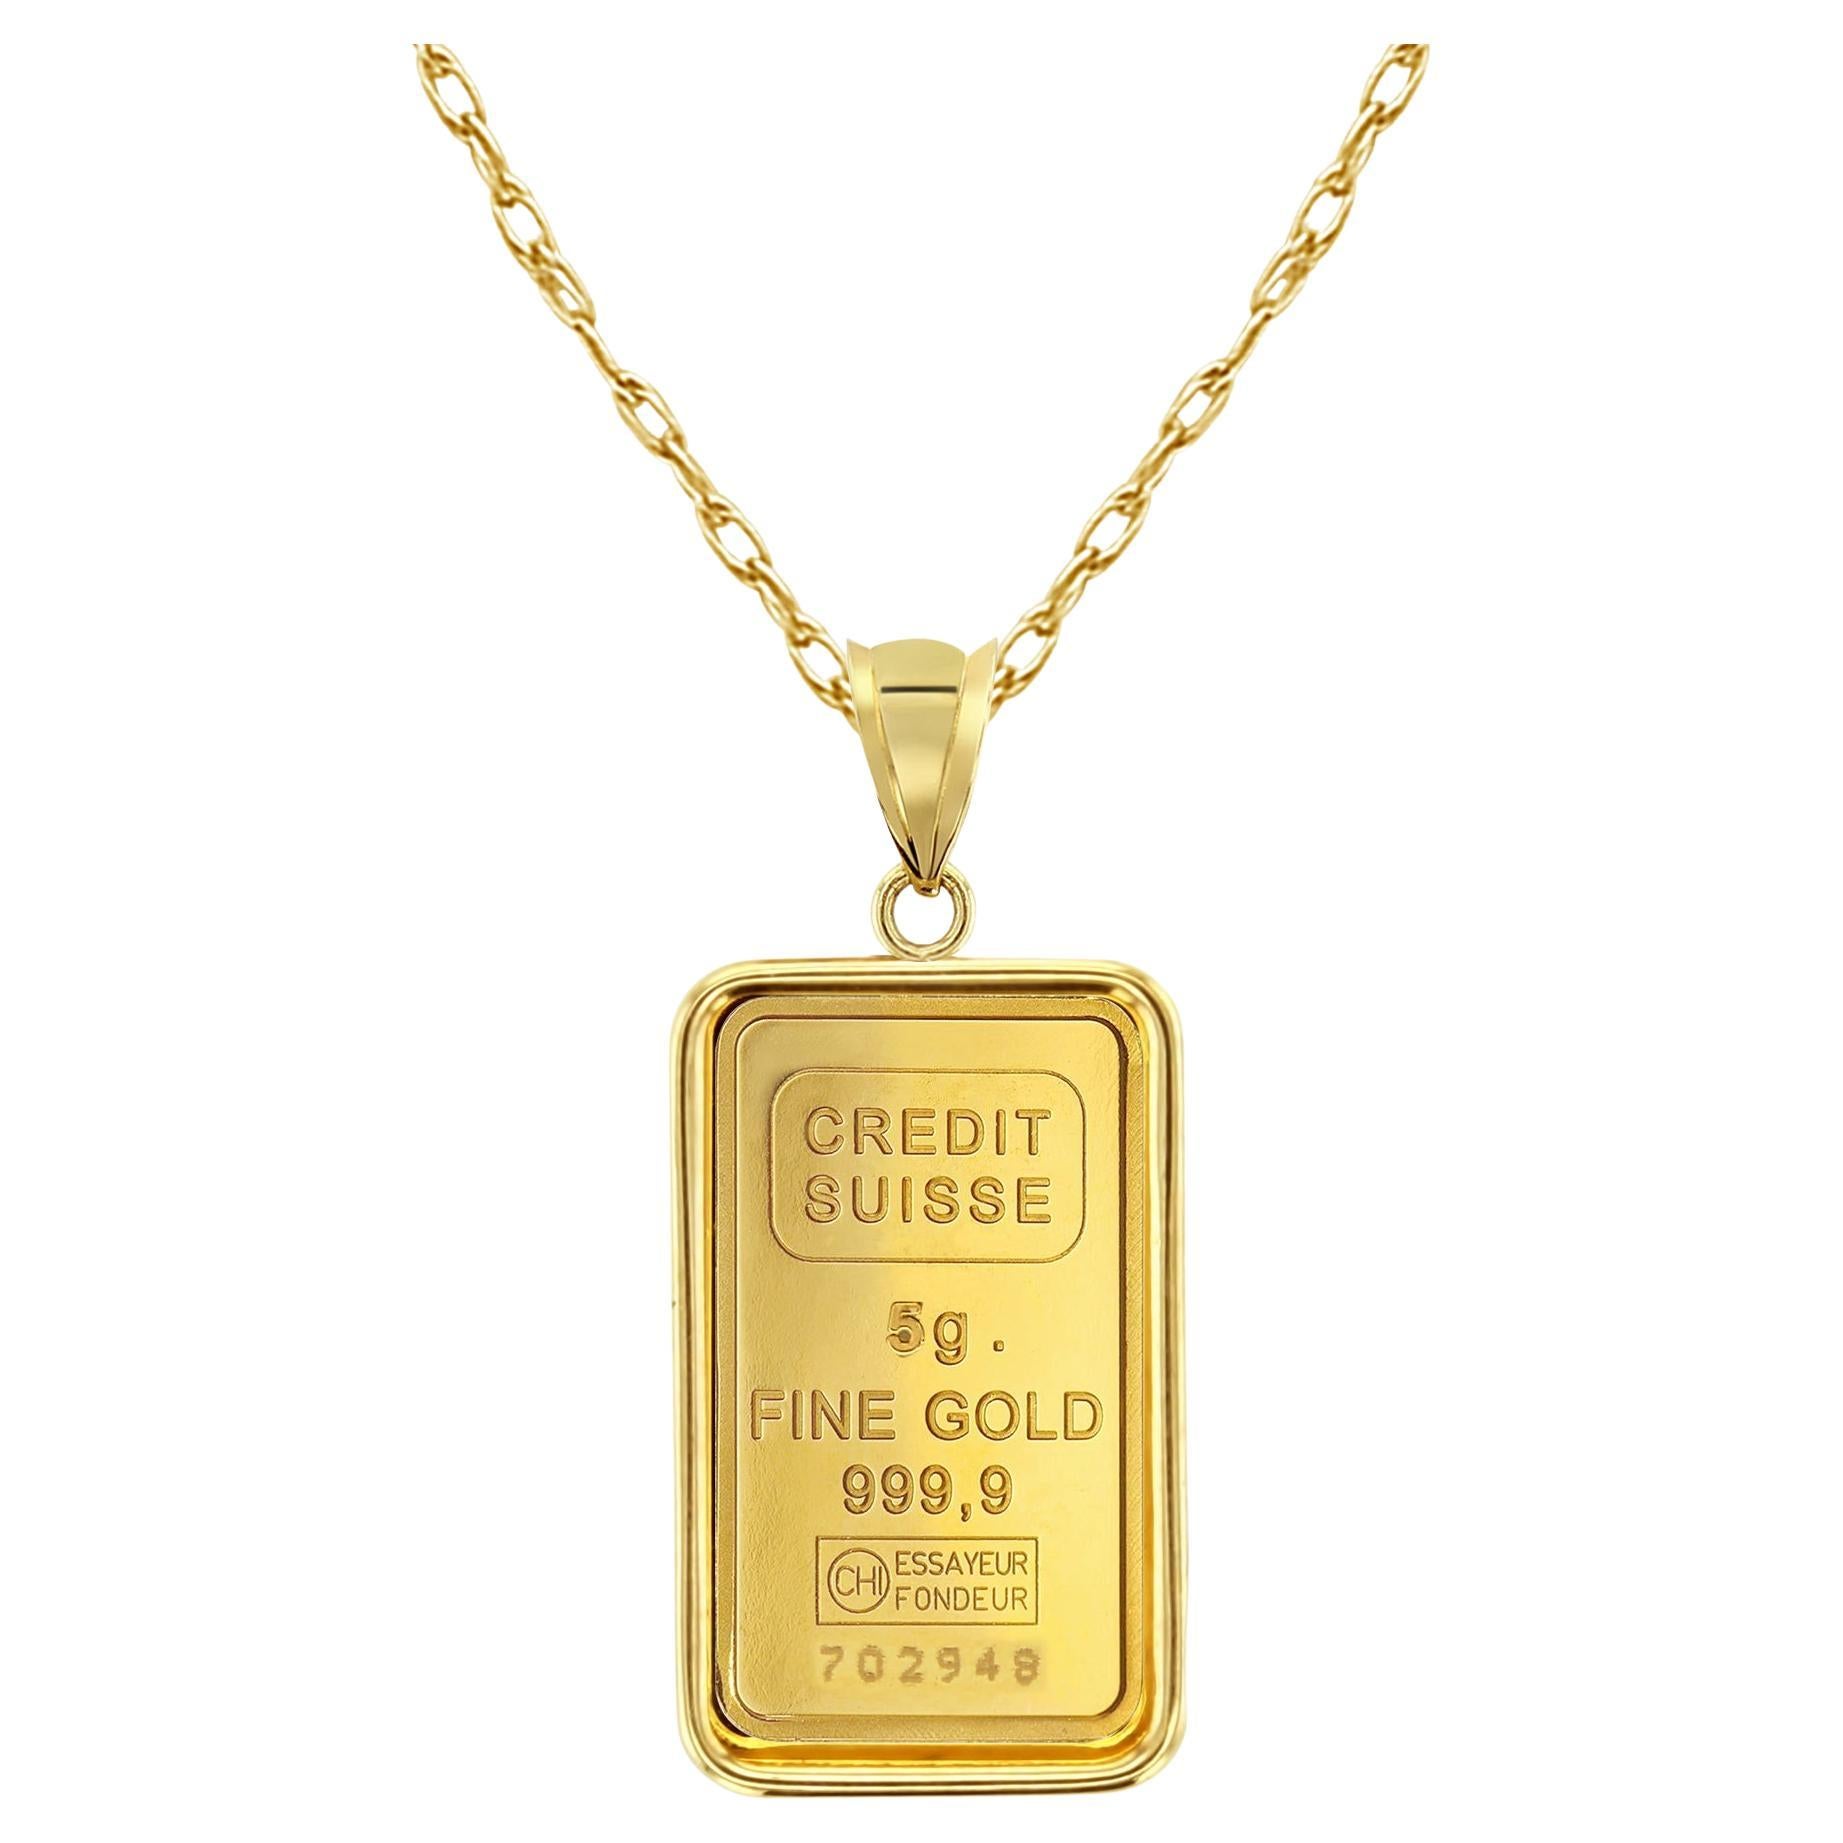 5 Gramm Credit Suisse Gold Bar mit polierter Lünette Halskette